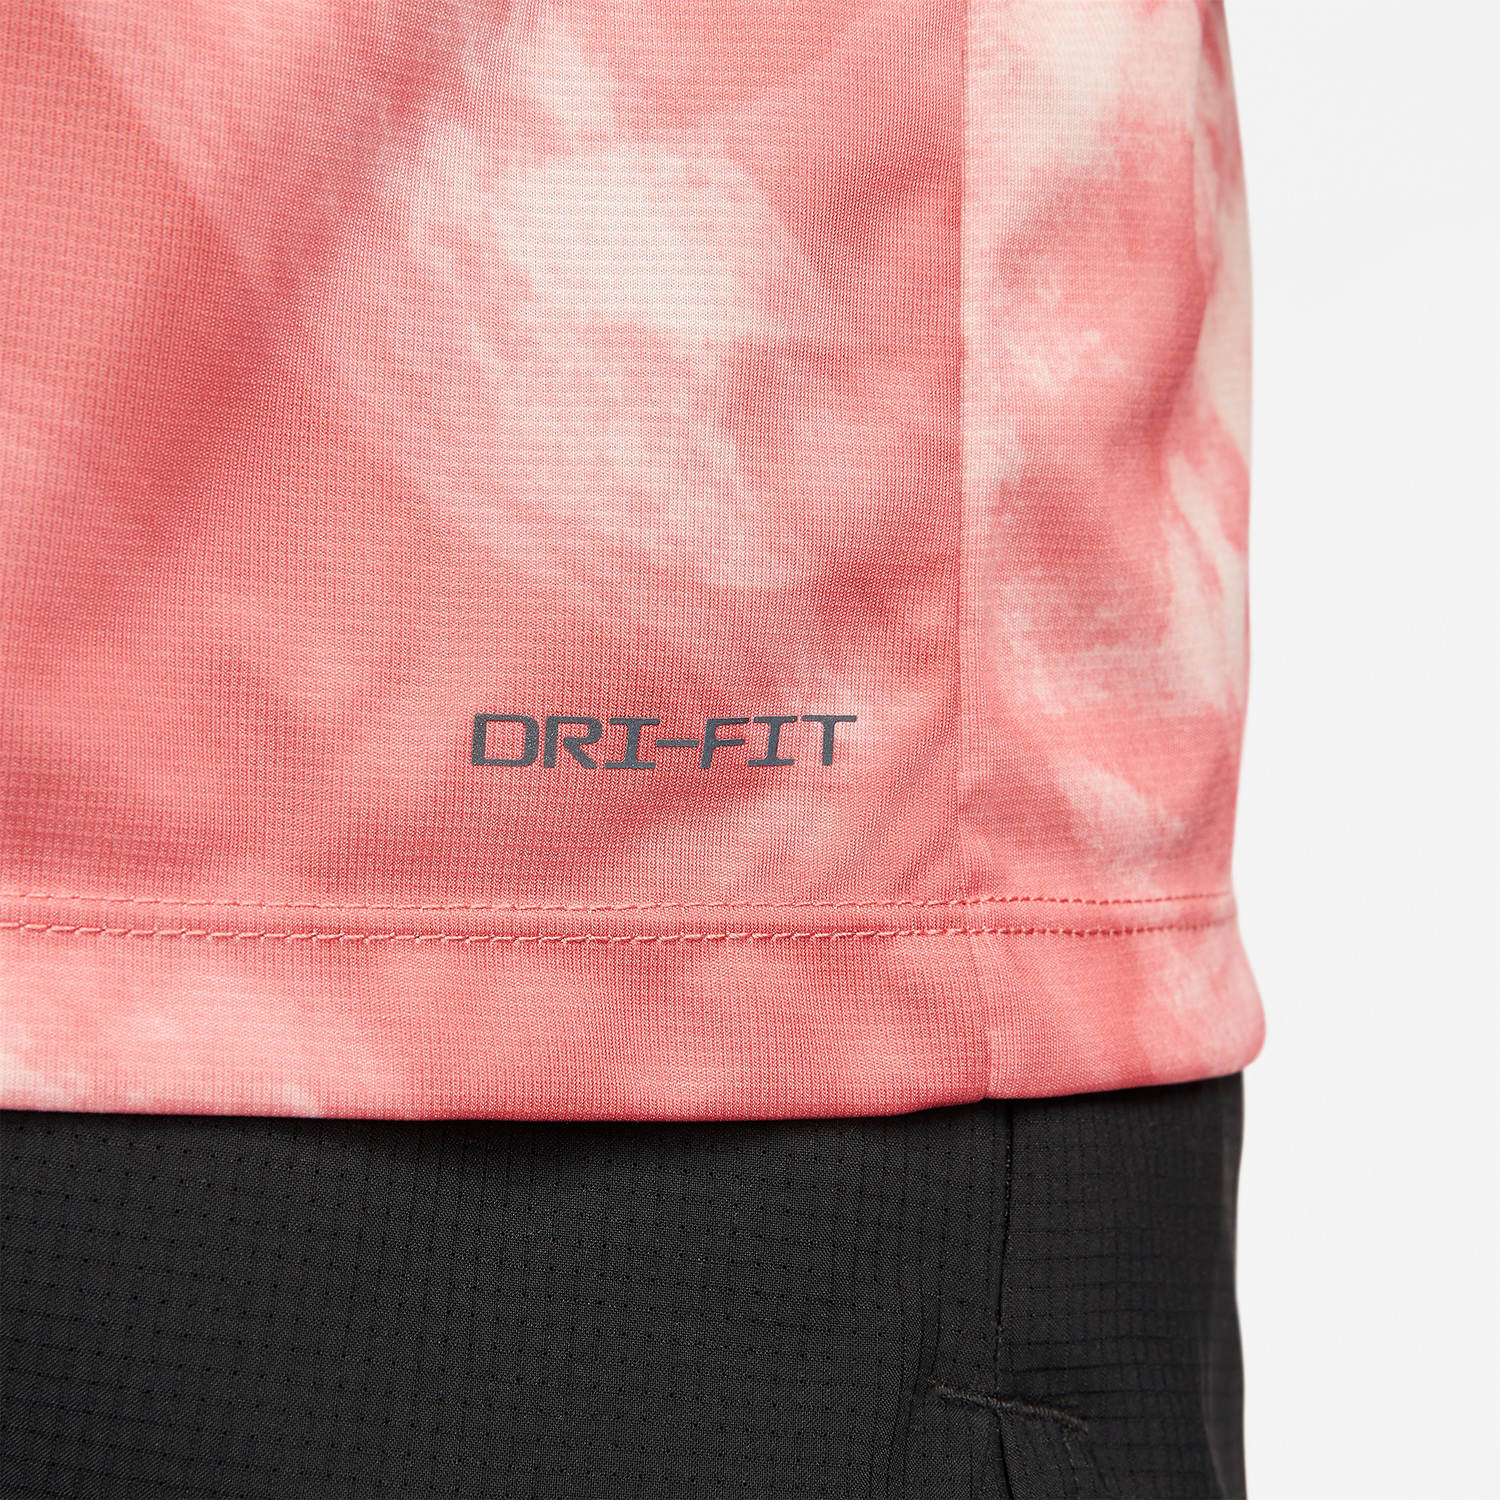 Nike Dri-FIT Run Division Rise 365 Camiseta - Adobe/Reflective Black